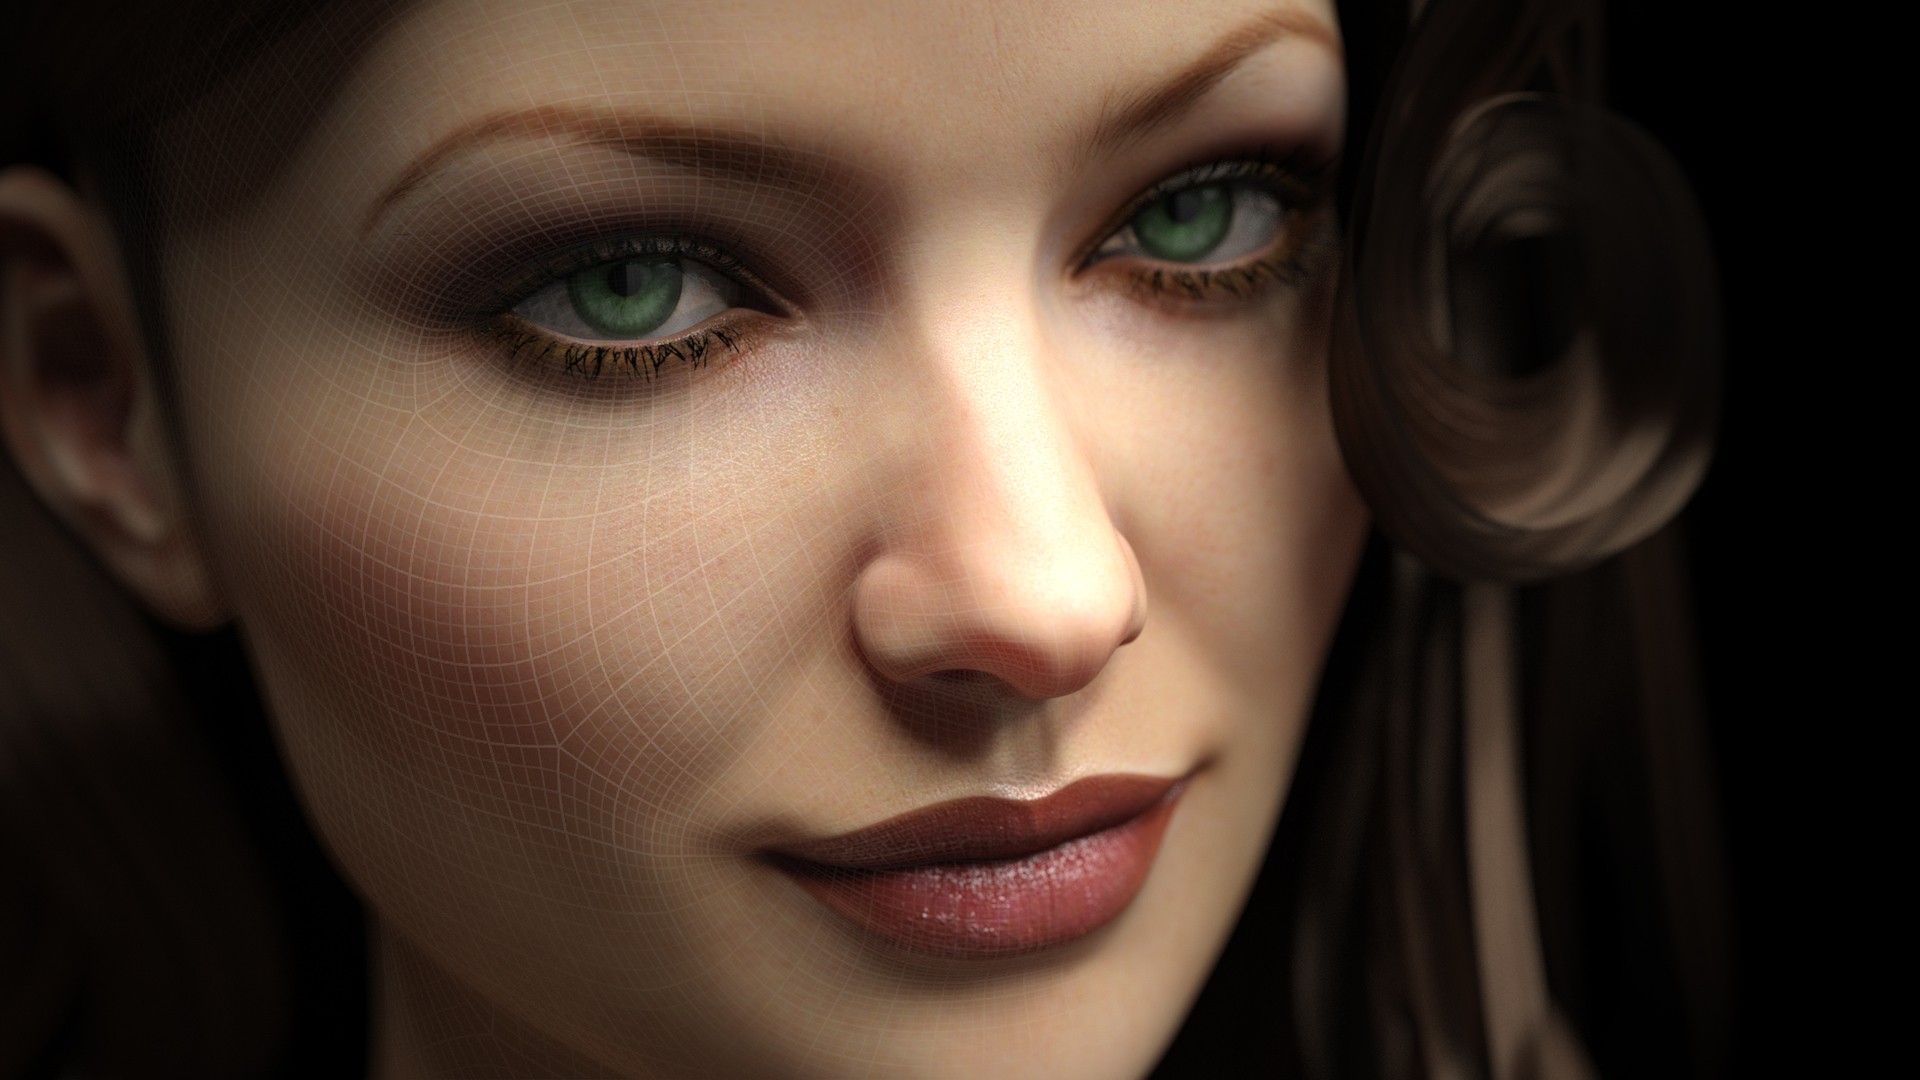 Women Digital Art Portrait Face CGi 3D Looking At Viewer Green Eyes Black Background Nets Square Ren 1920x1080